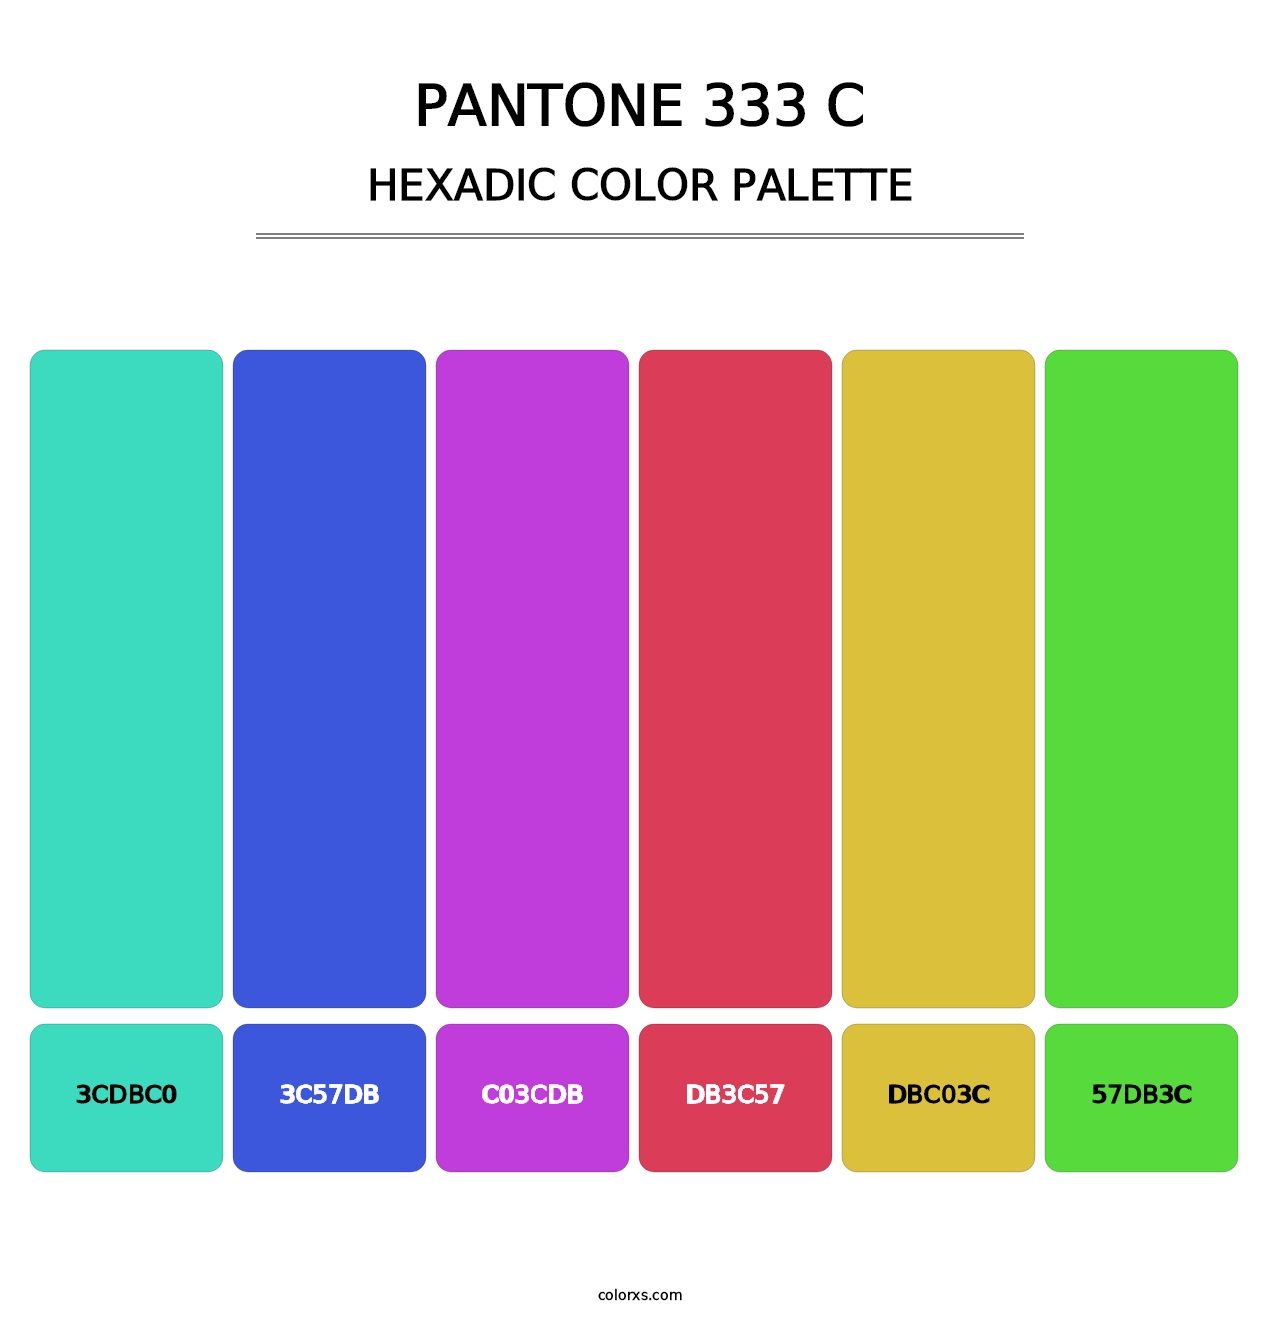 PANTONE 333 C - Hexadic Color Palette